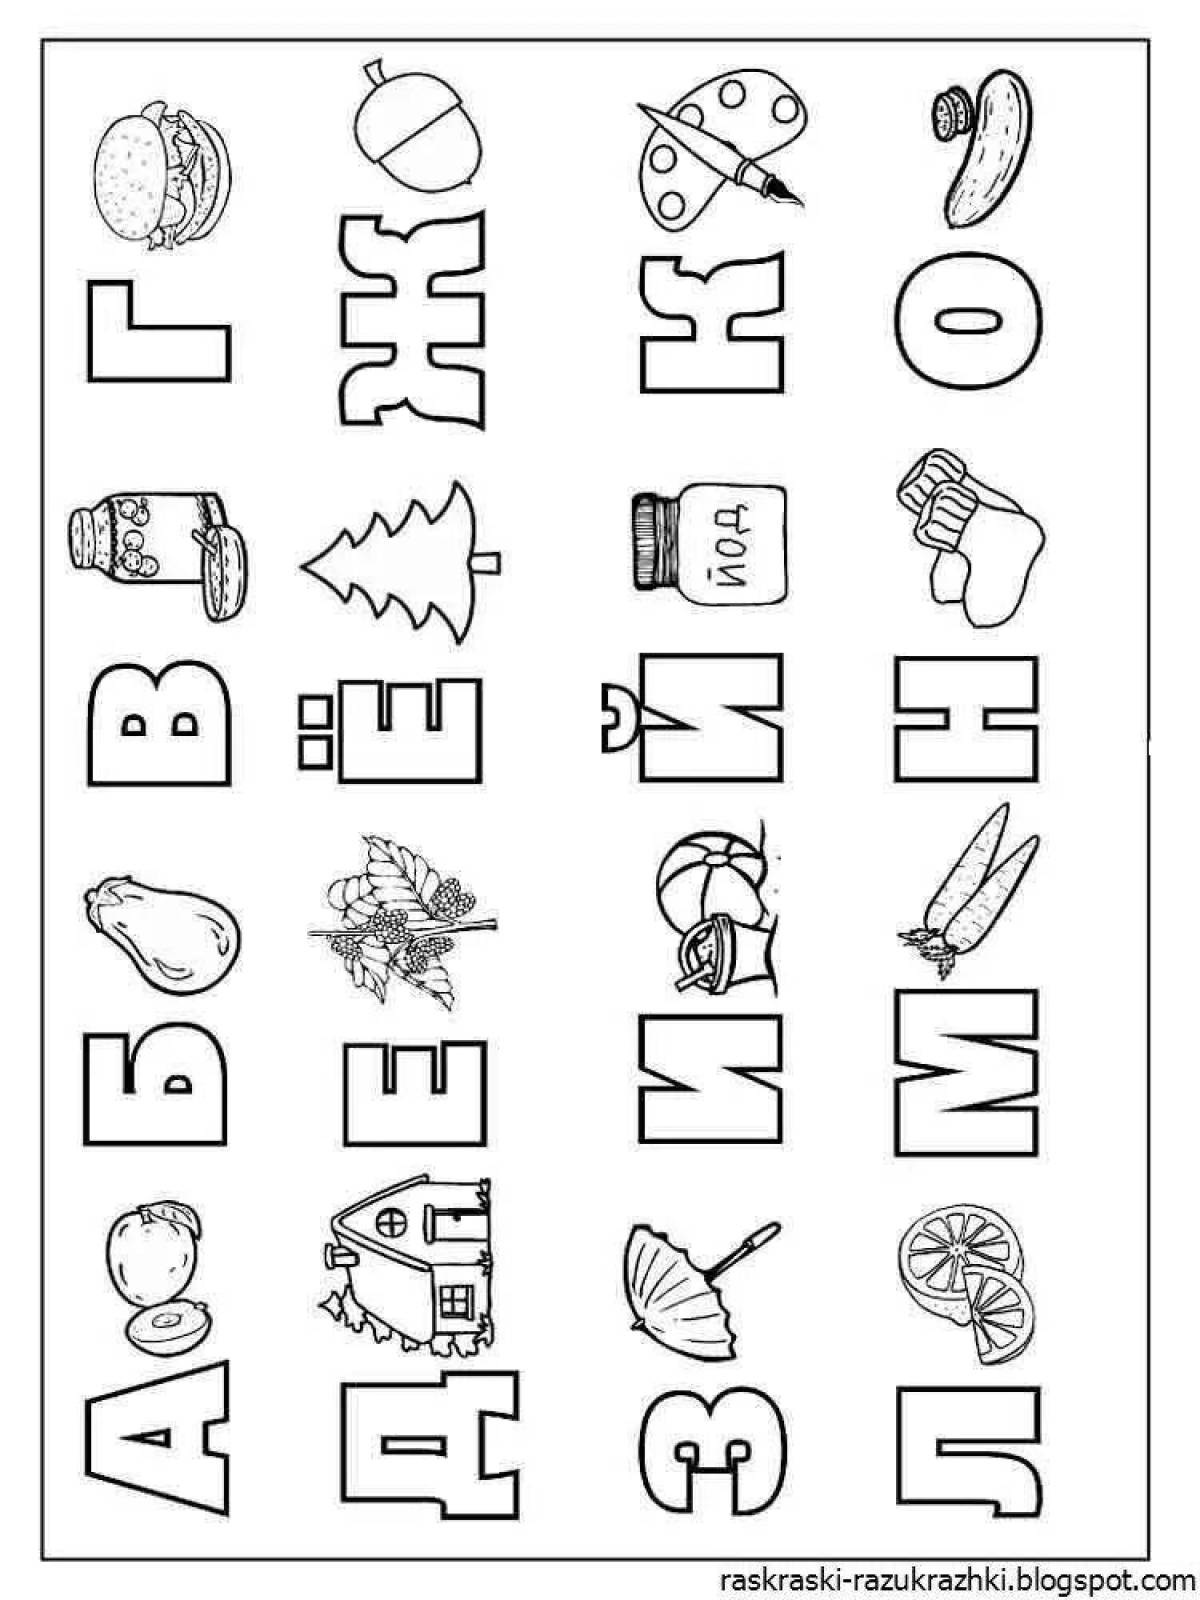 Alphabet for children 5 6 years old #16